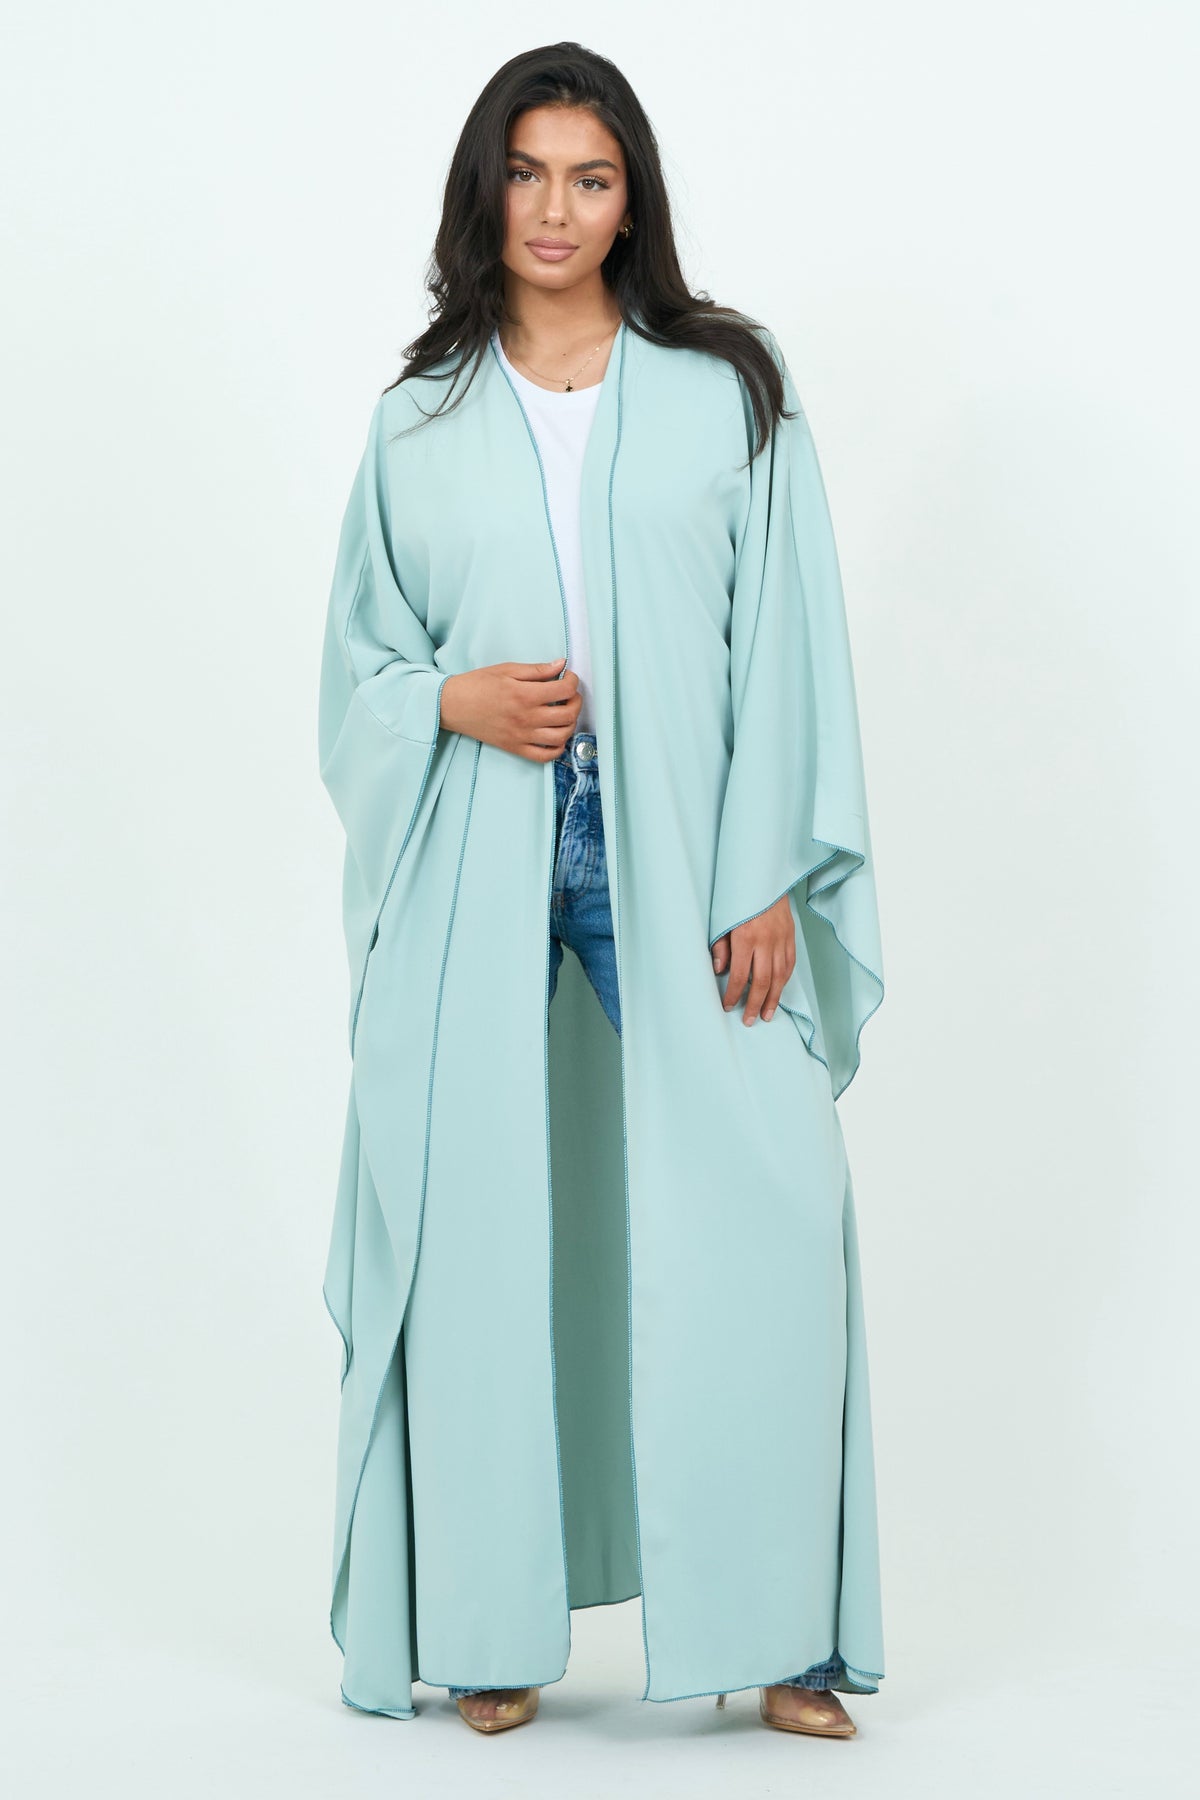 Baby Blue Abaya With Sleeves